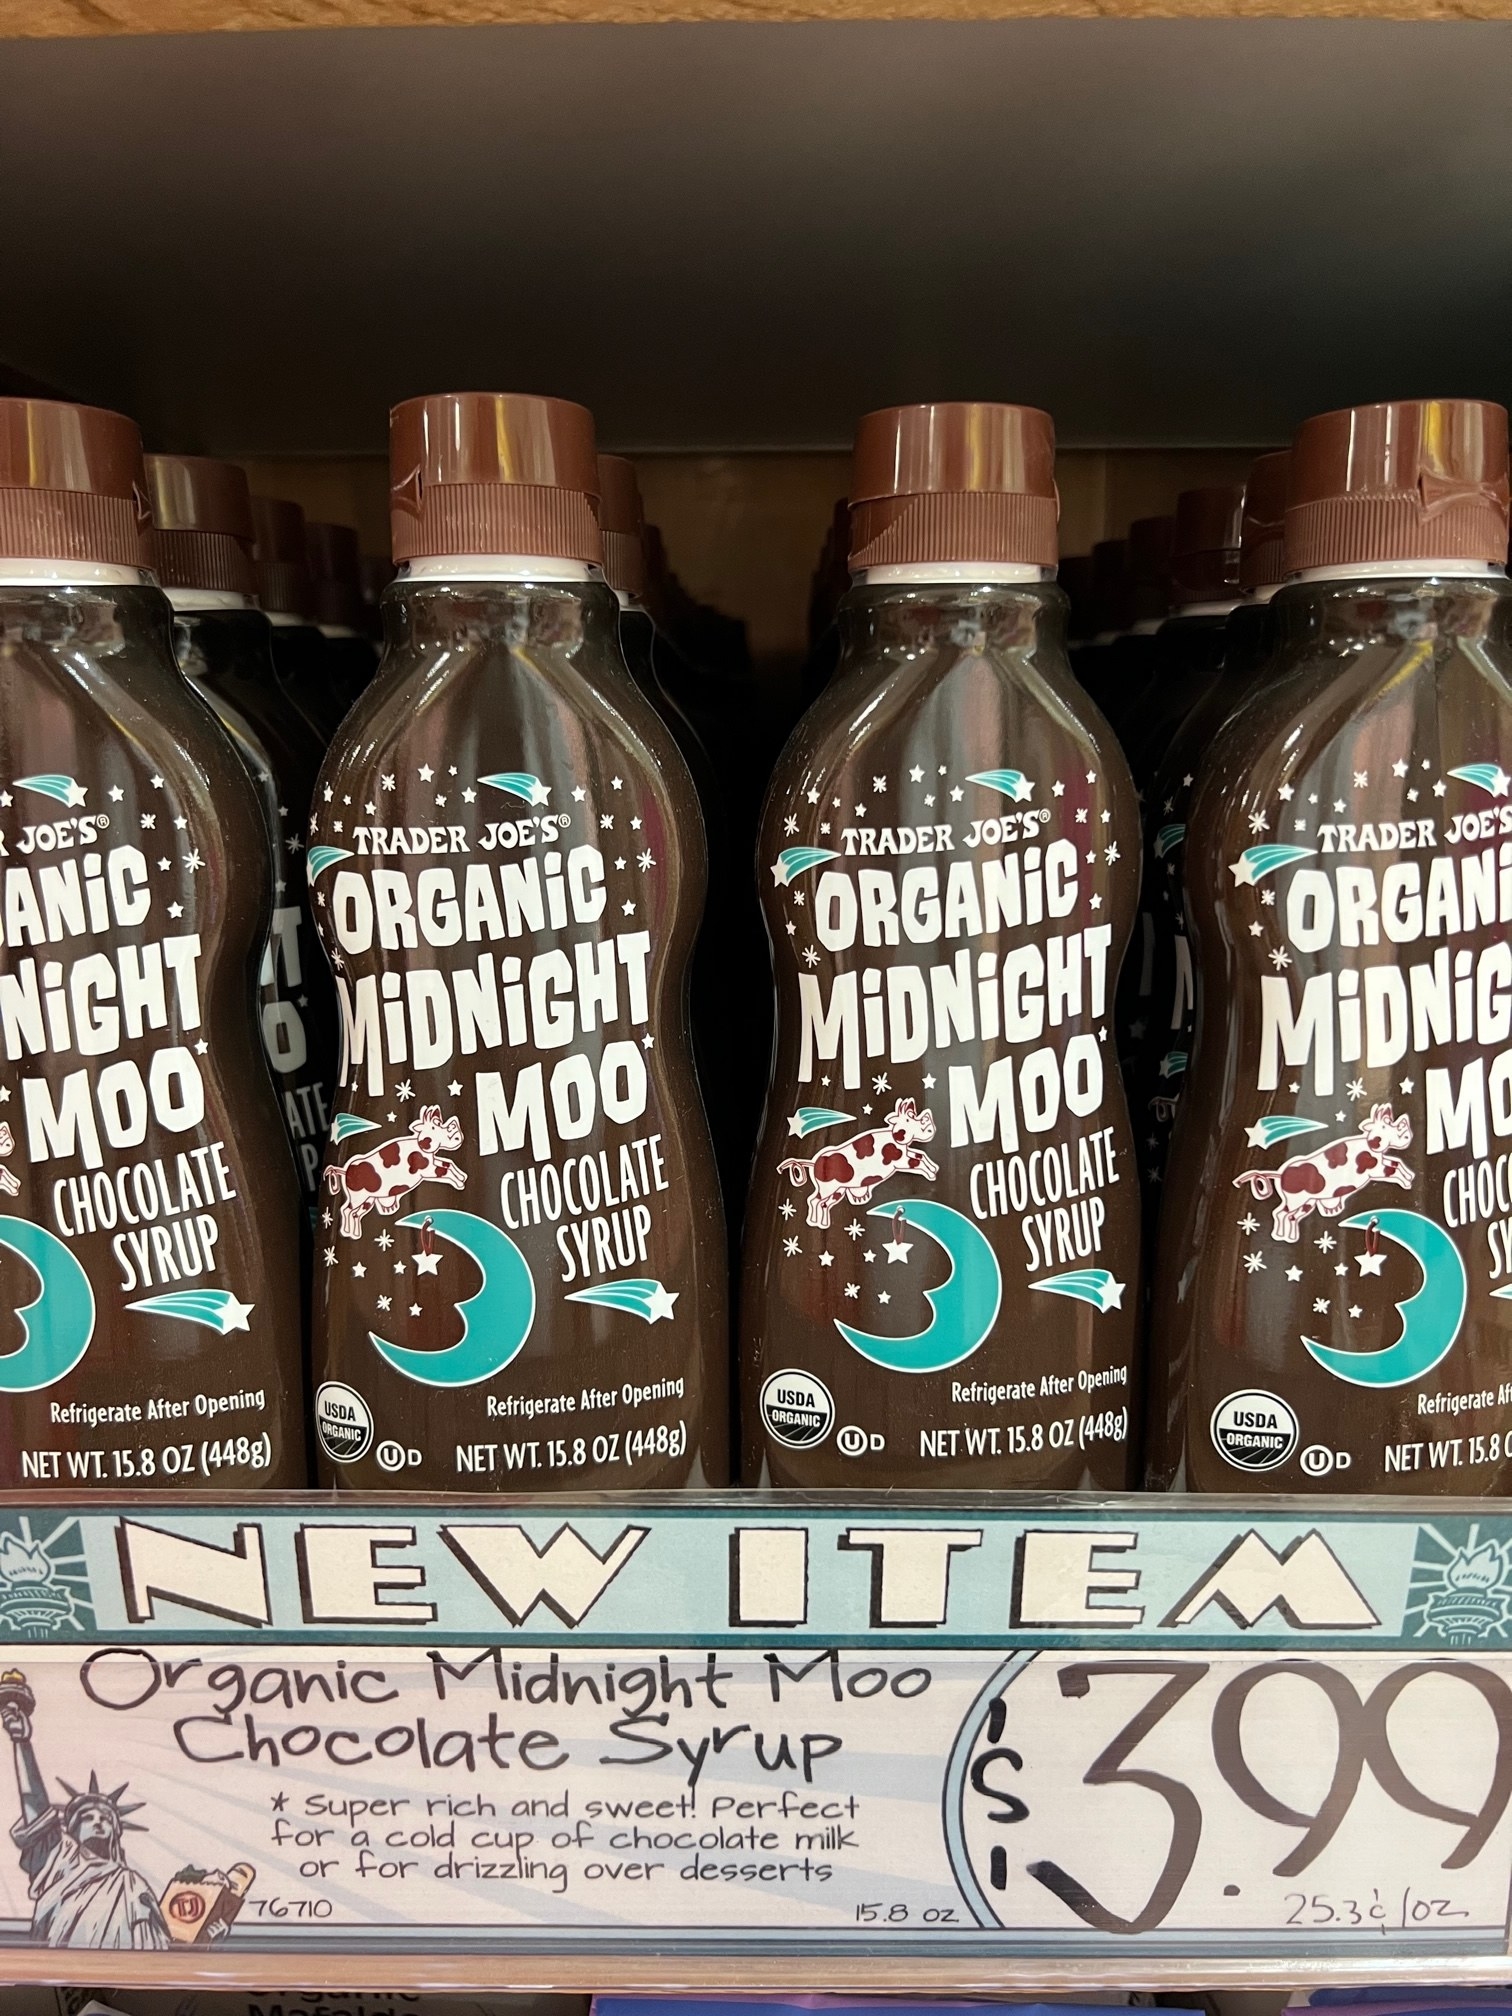 Organic Midnight Moo Chocolate Syrup